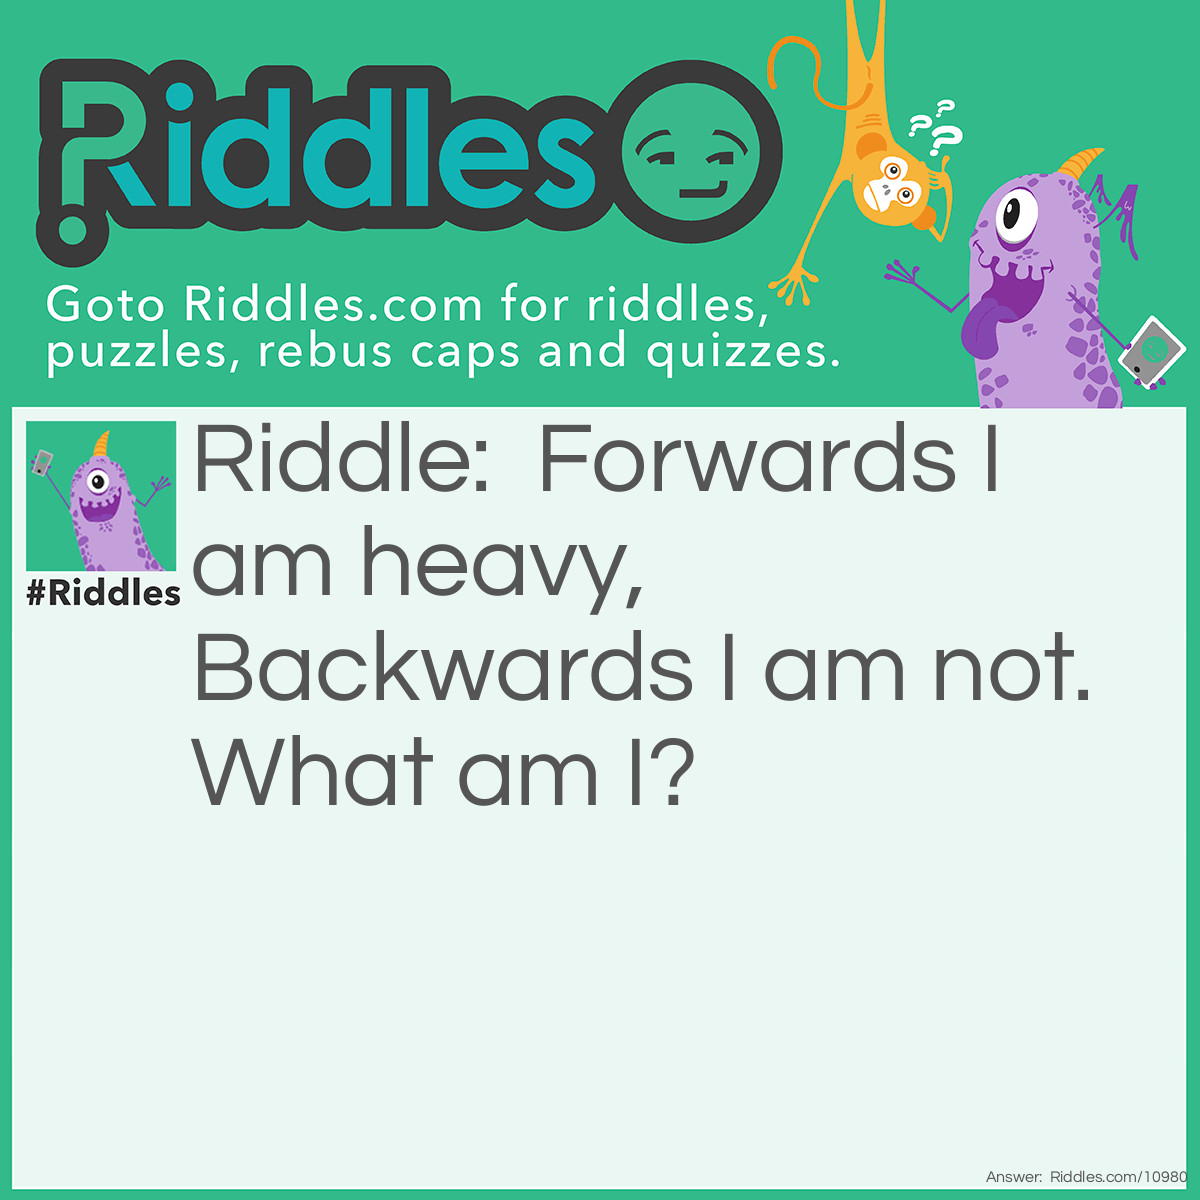 Riddle: Forwards I am heavy, Backwards I am not. What am I? Answer: A Ton.